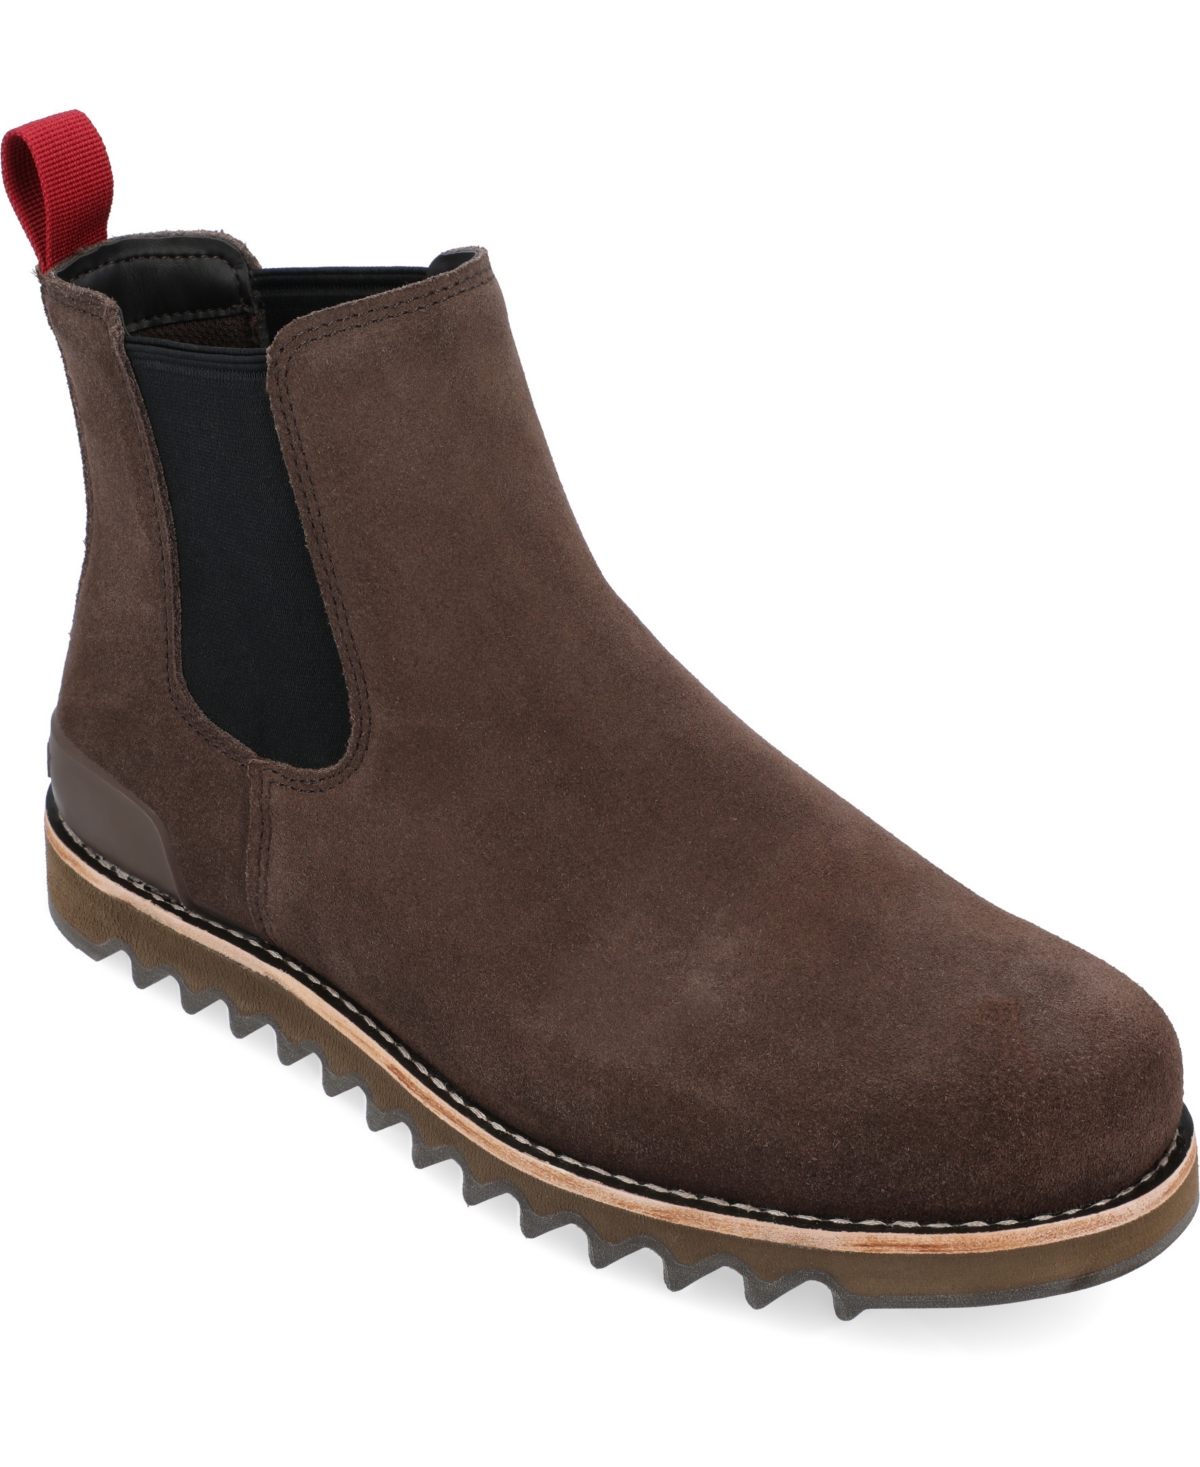 Men's Yellowstone Tru Comfort Foam Pull-On Water Resistant Chelsea Boots - Gray